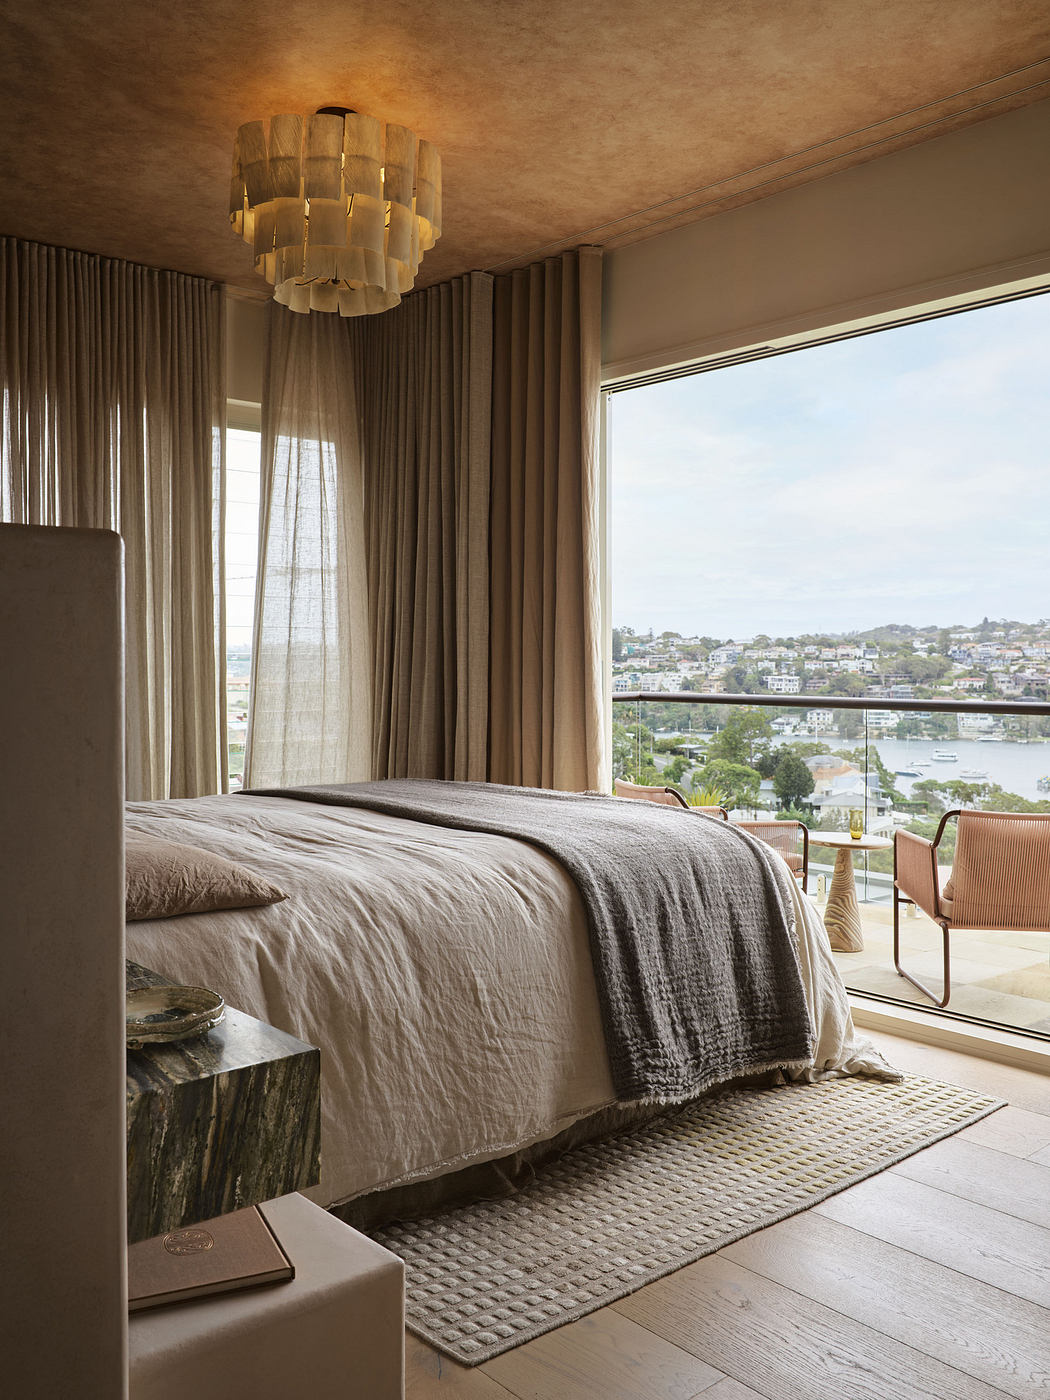 Elegant bedroom with large window overlooking water, neutral tones, and modern lighting.